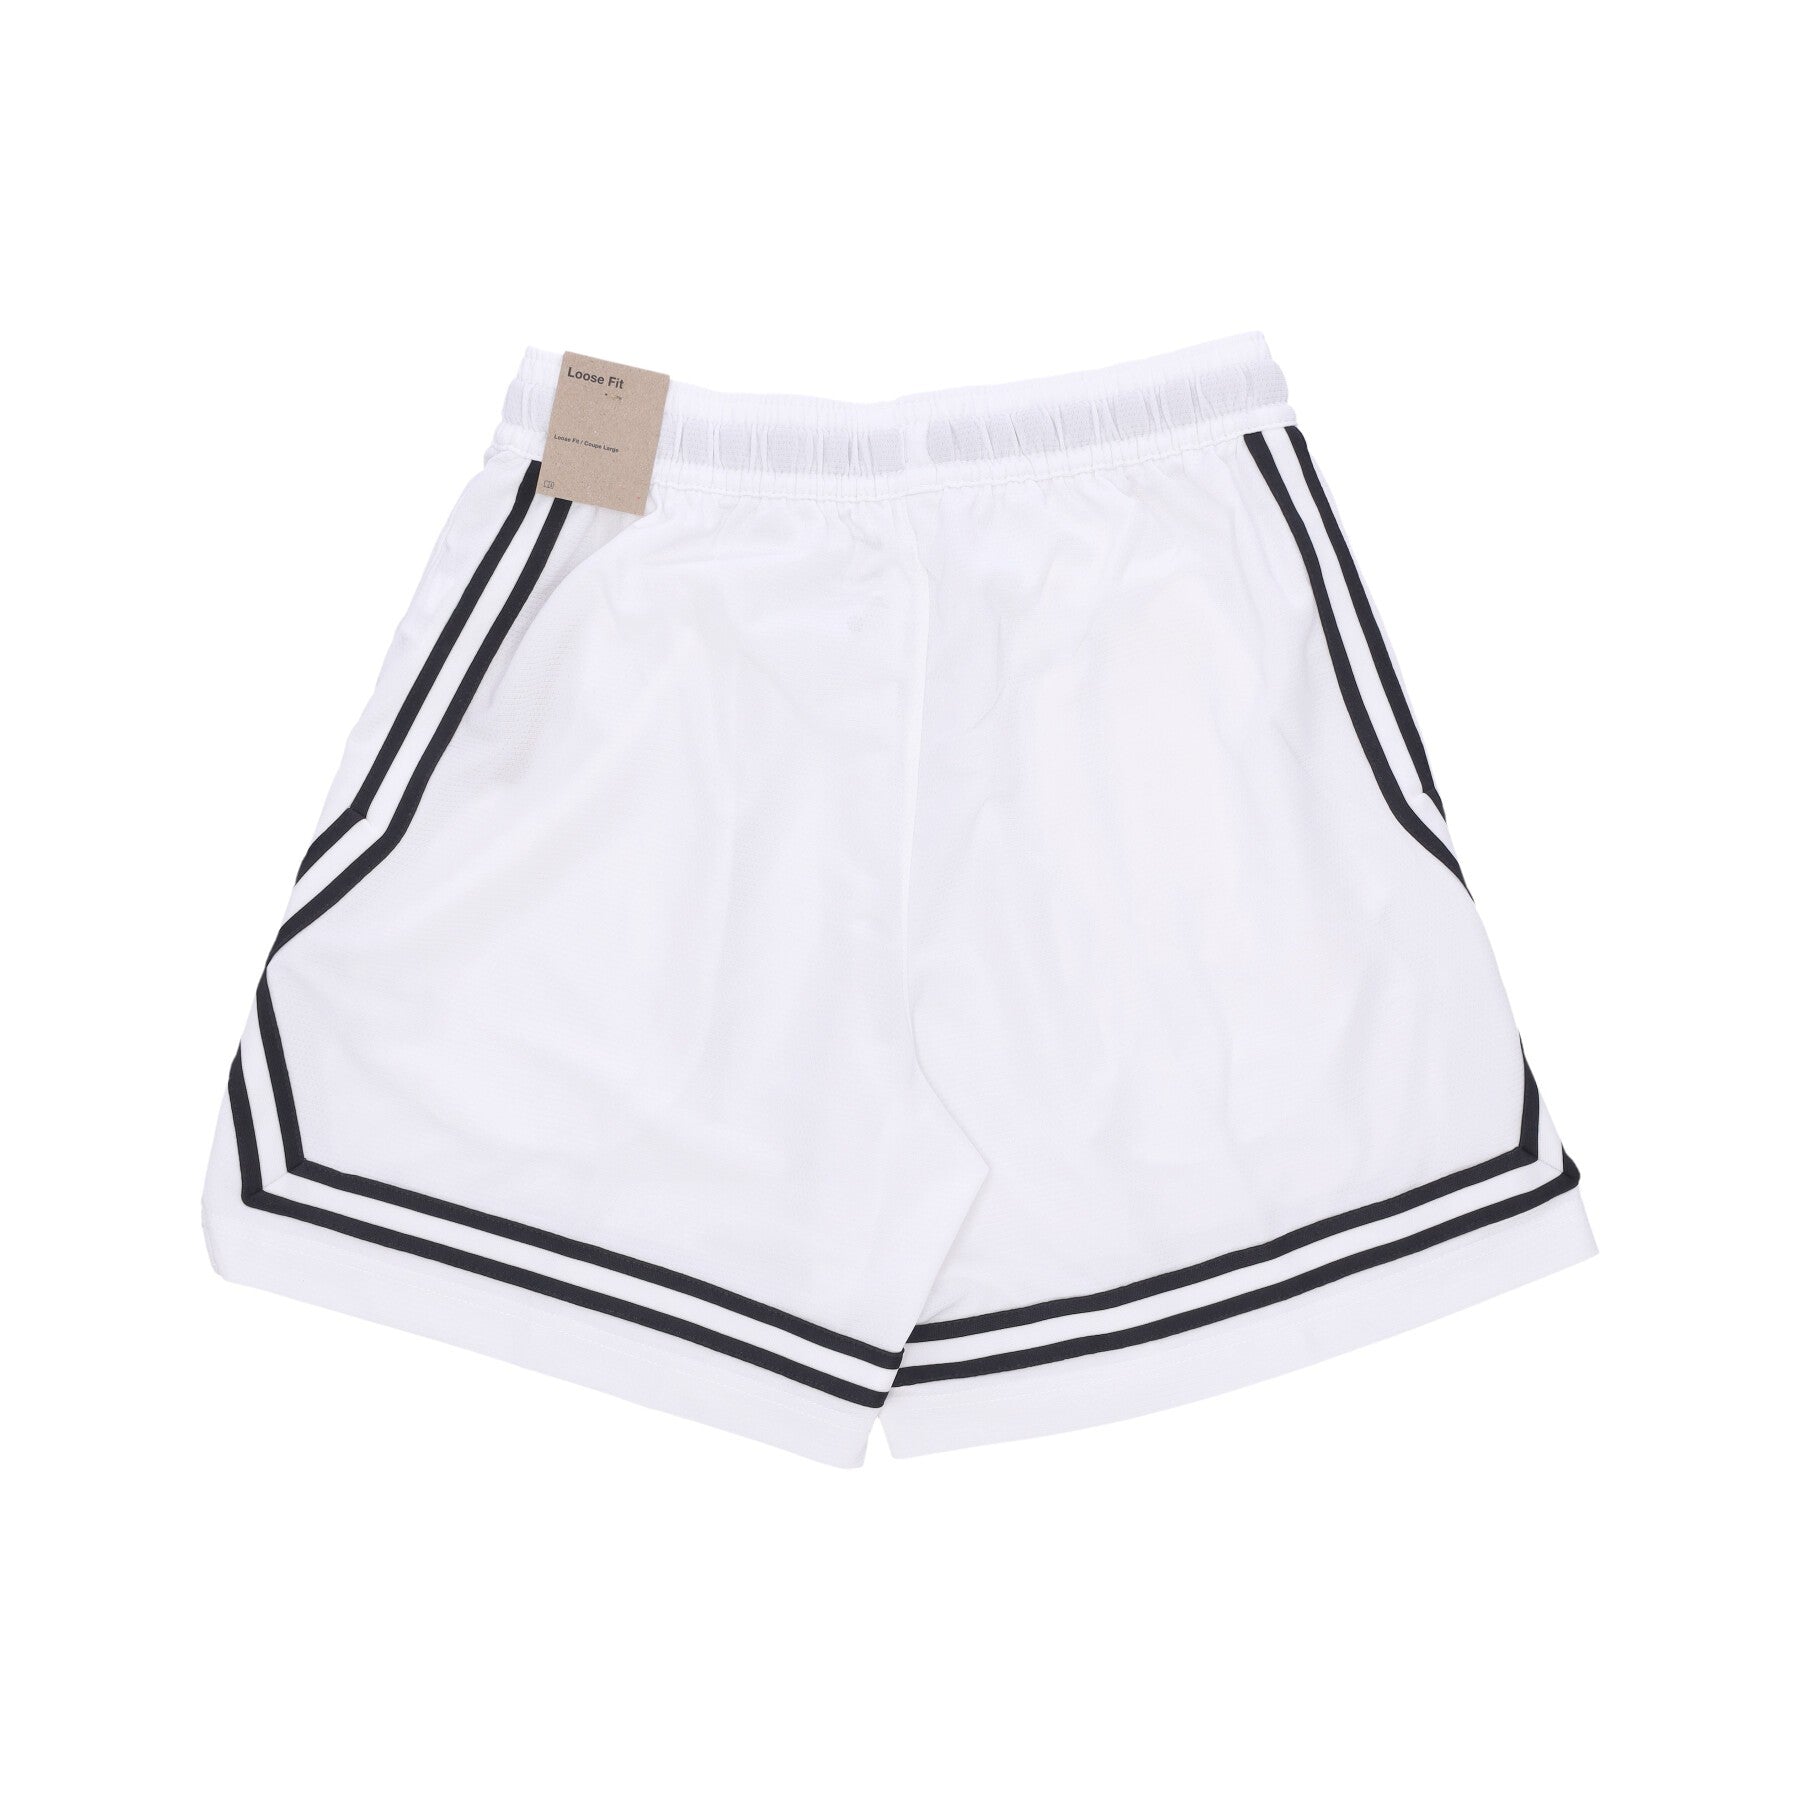 Pantaloncino Tipo Basket Donna Fly Crossover Basketball Short White/black